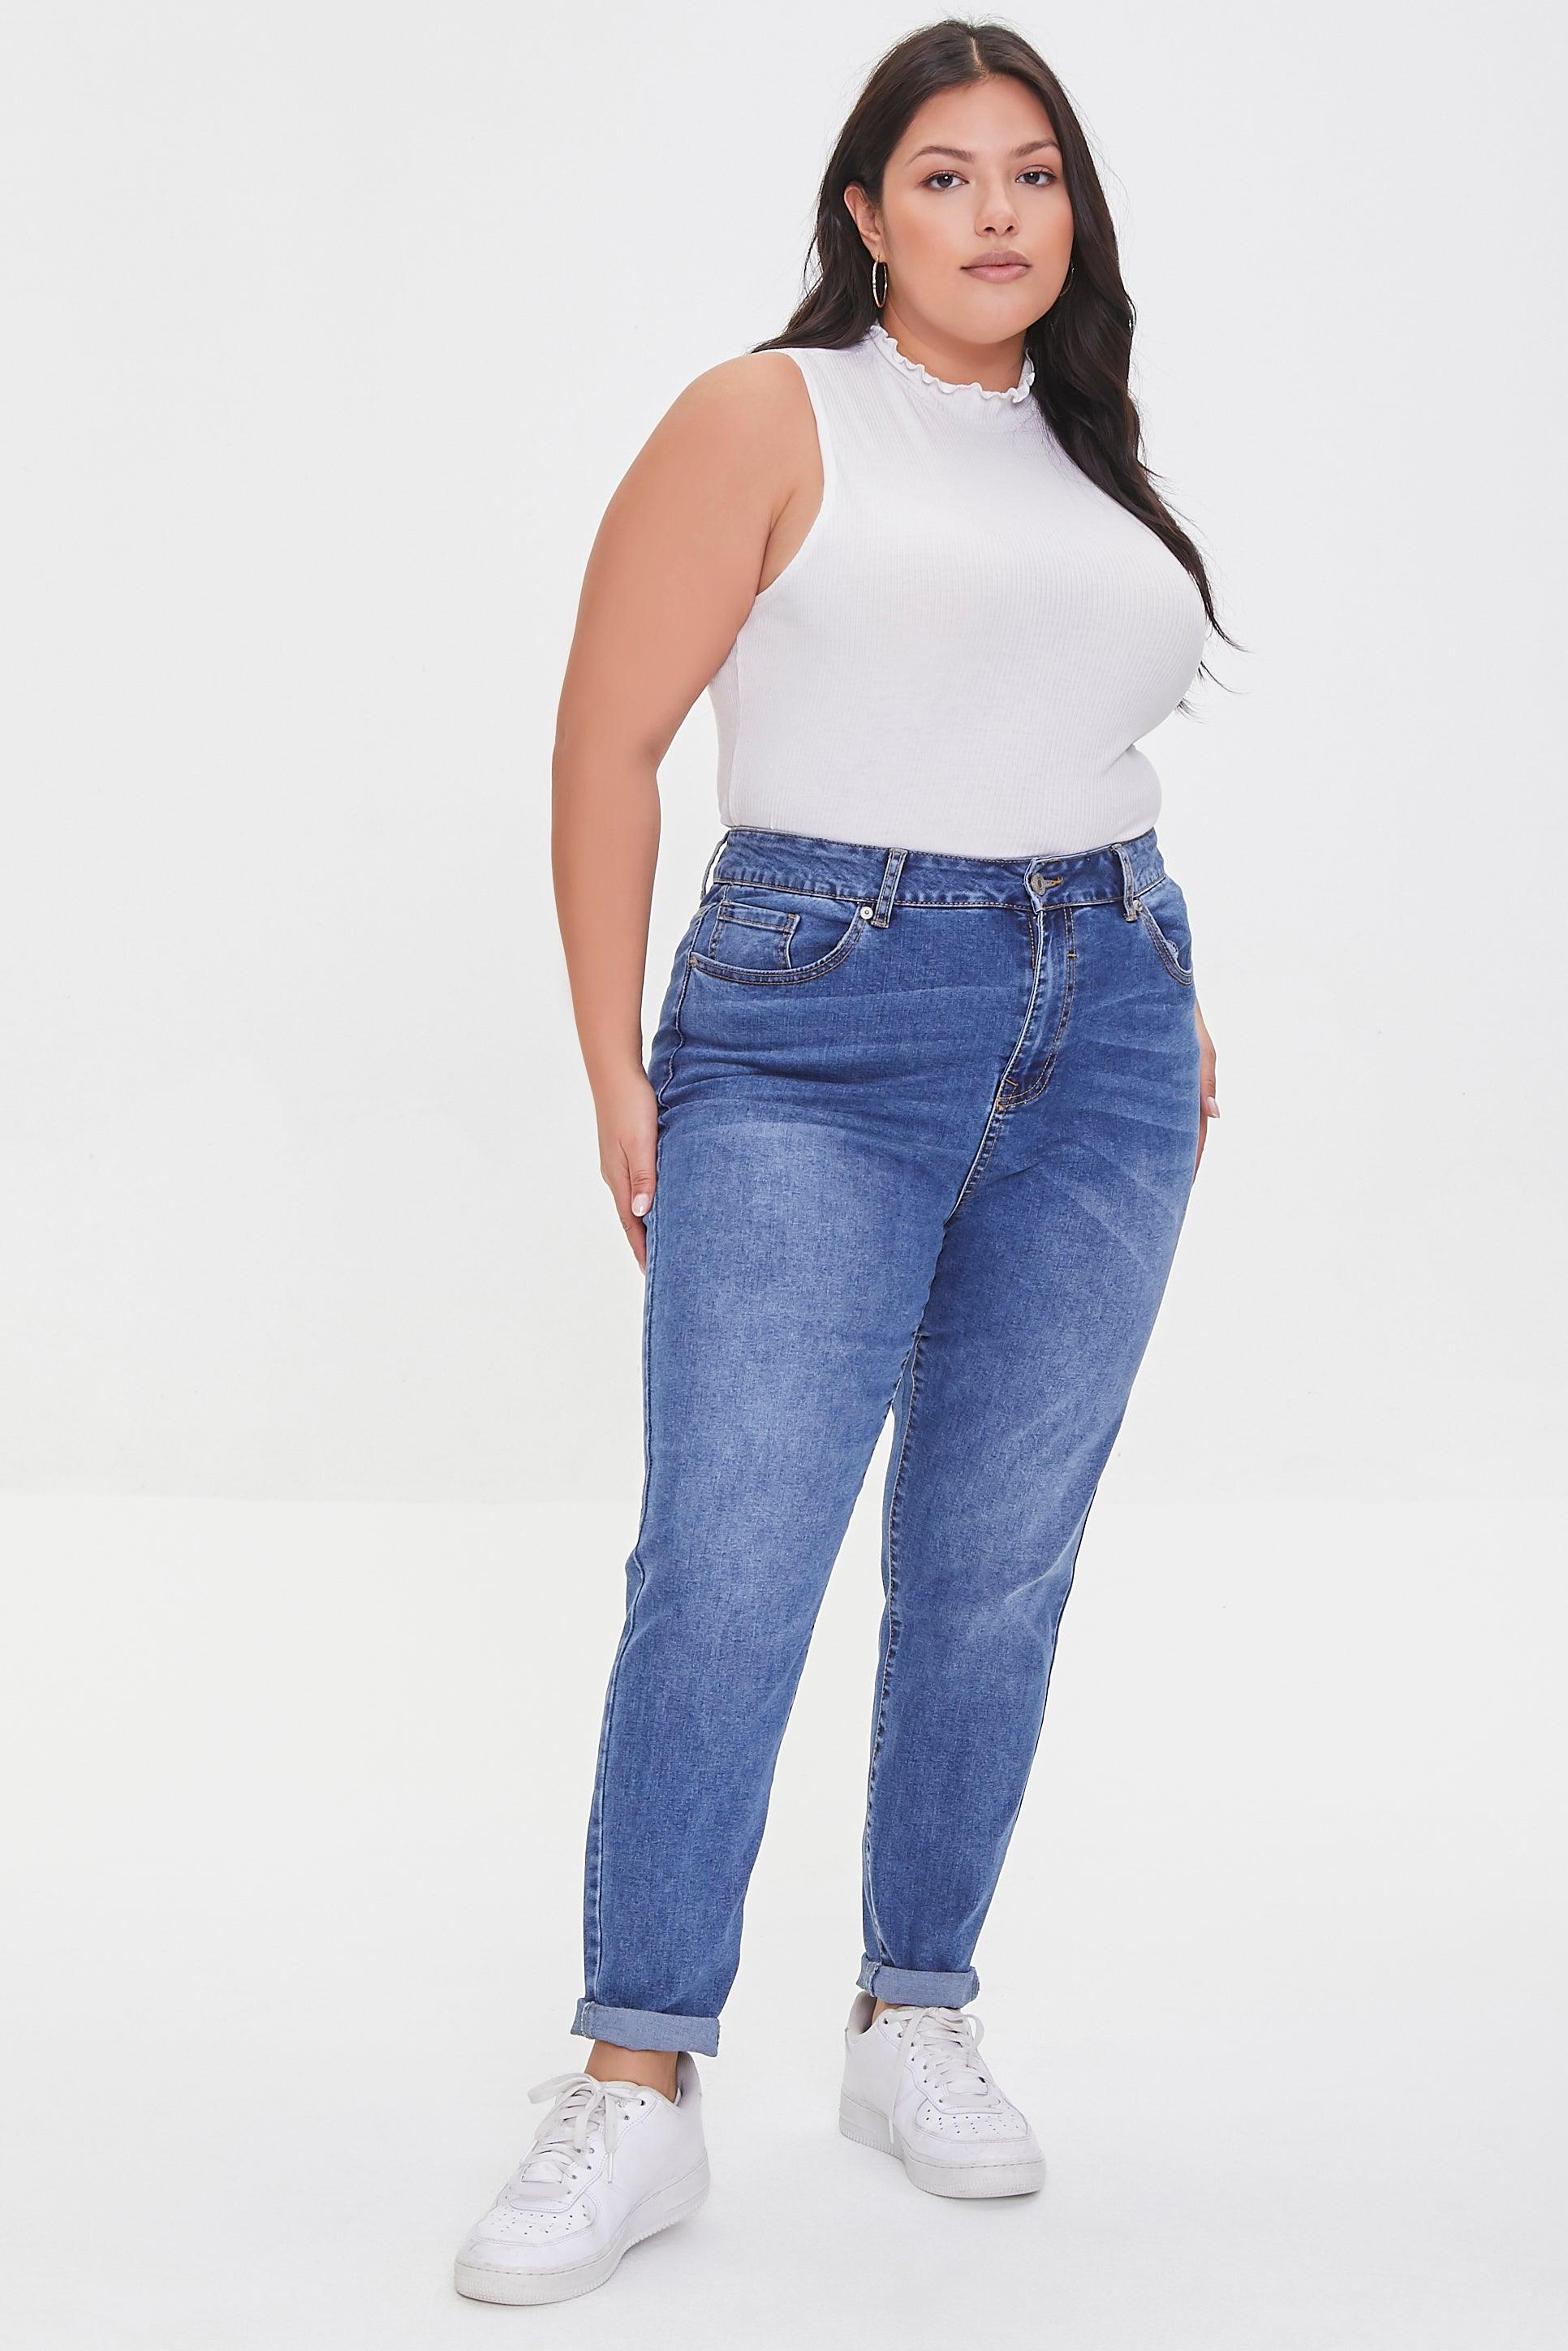 Mediumdenim Plus Size High-Rise Skinny Jeans 